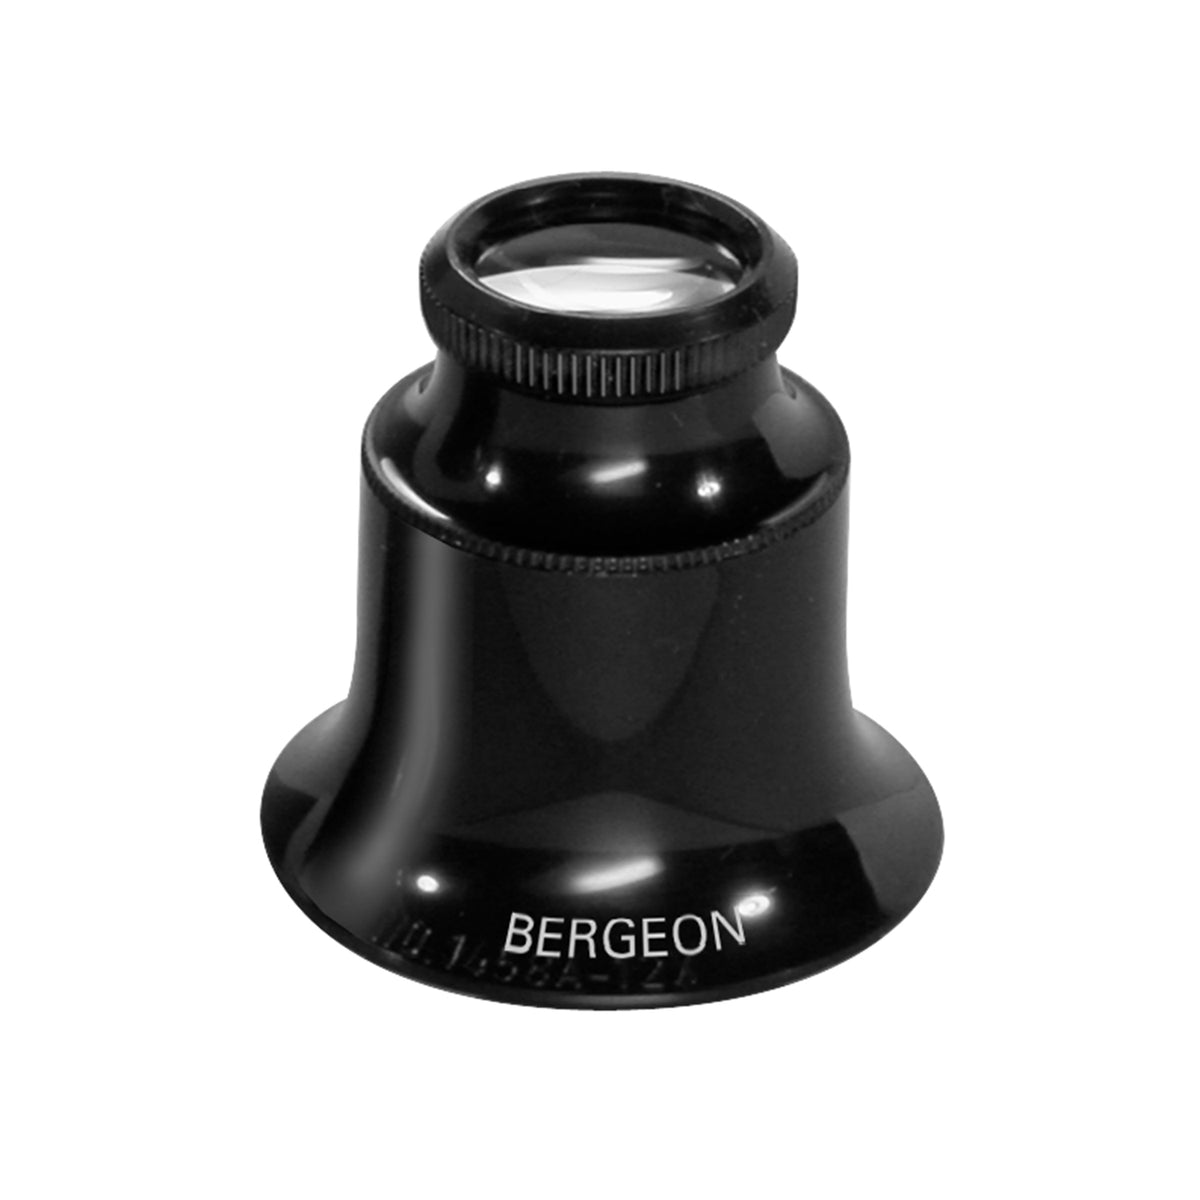 Bergeon 1458-A-12 Uhrmacherlupe, Kontroll-Okular, Vergrößerungshilfe, Triplet-Linse, 12x, zerlegbar